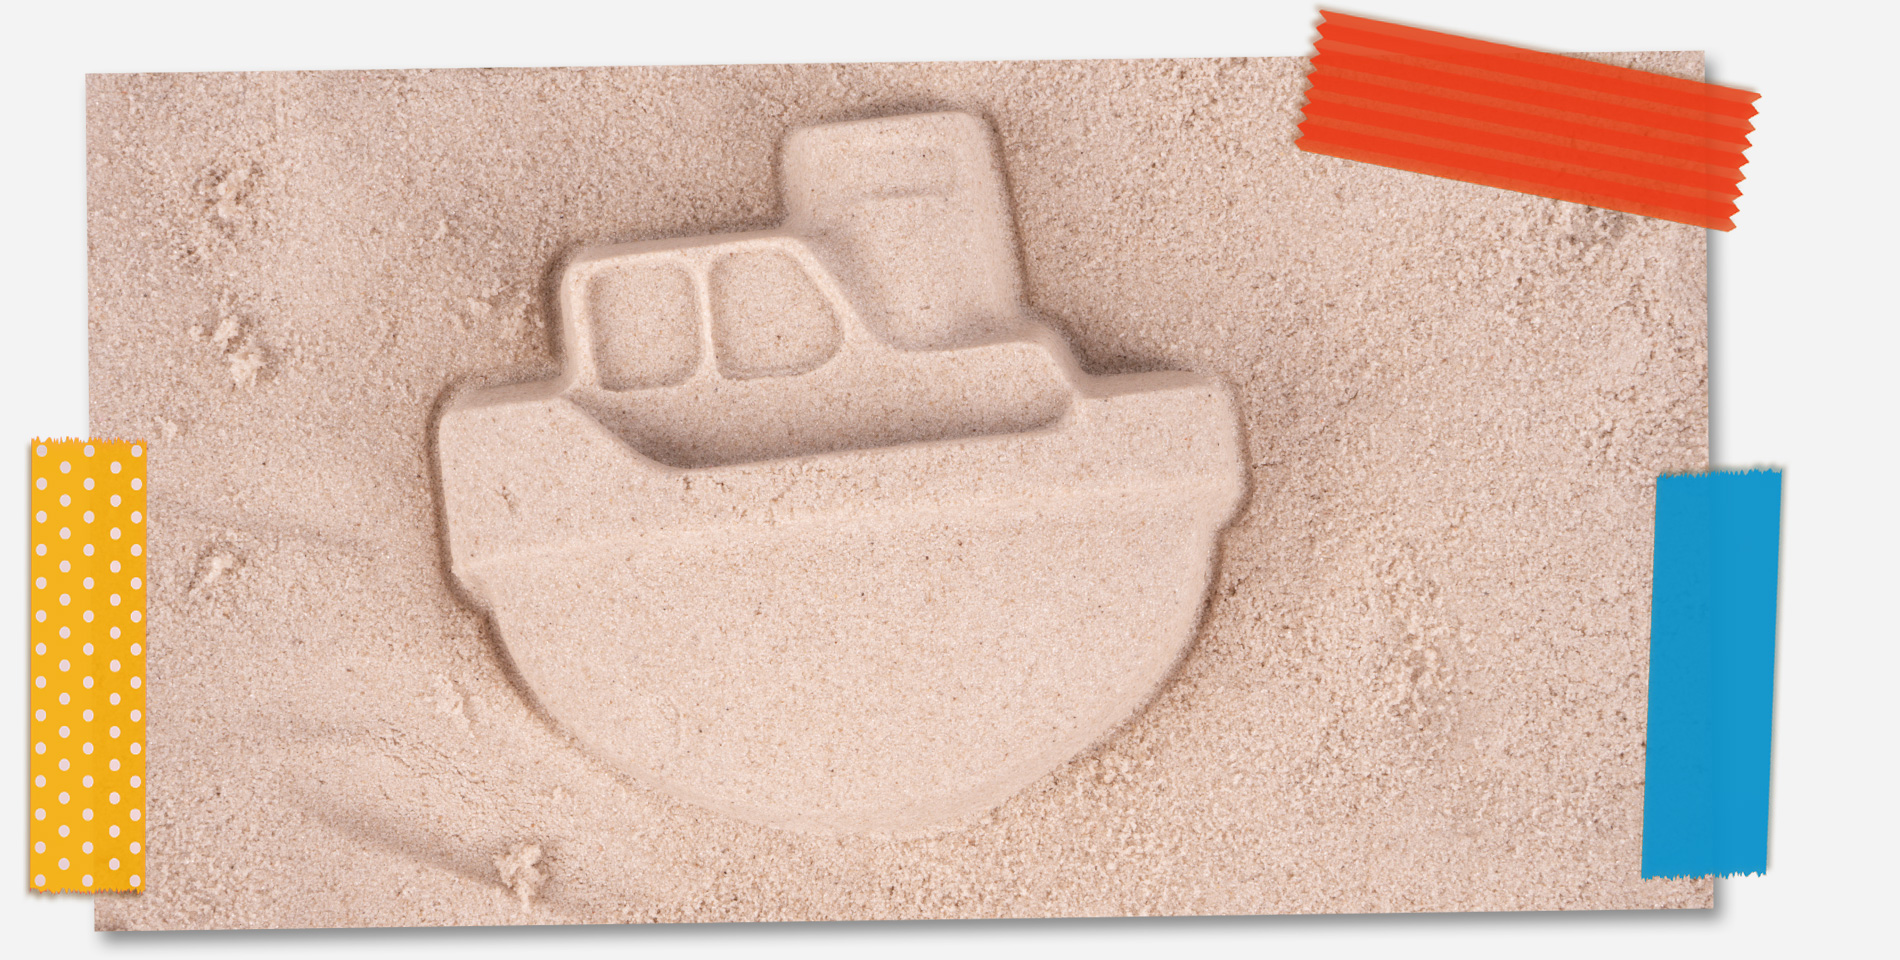 Sandkastenspielzeug